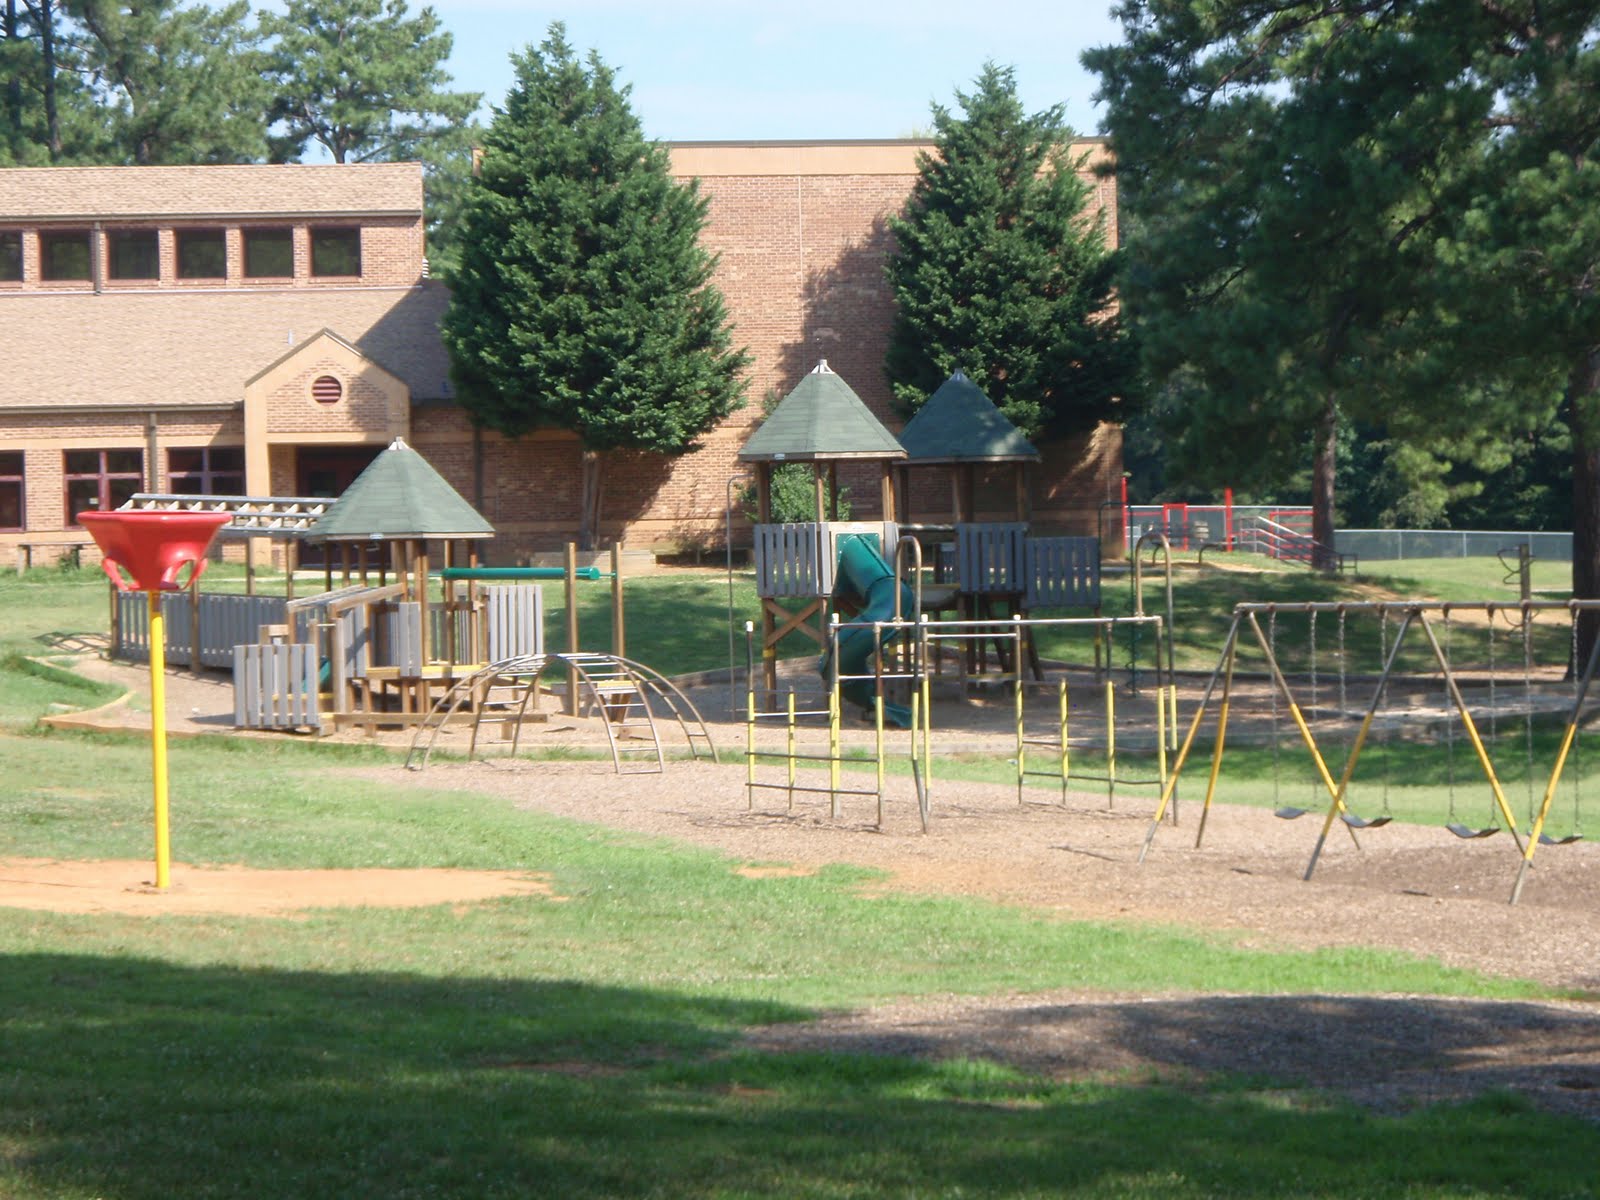 Empty school playground